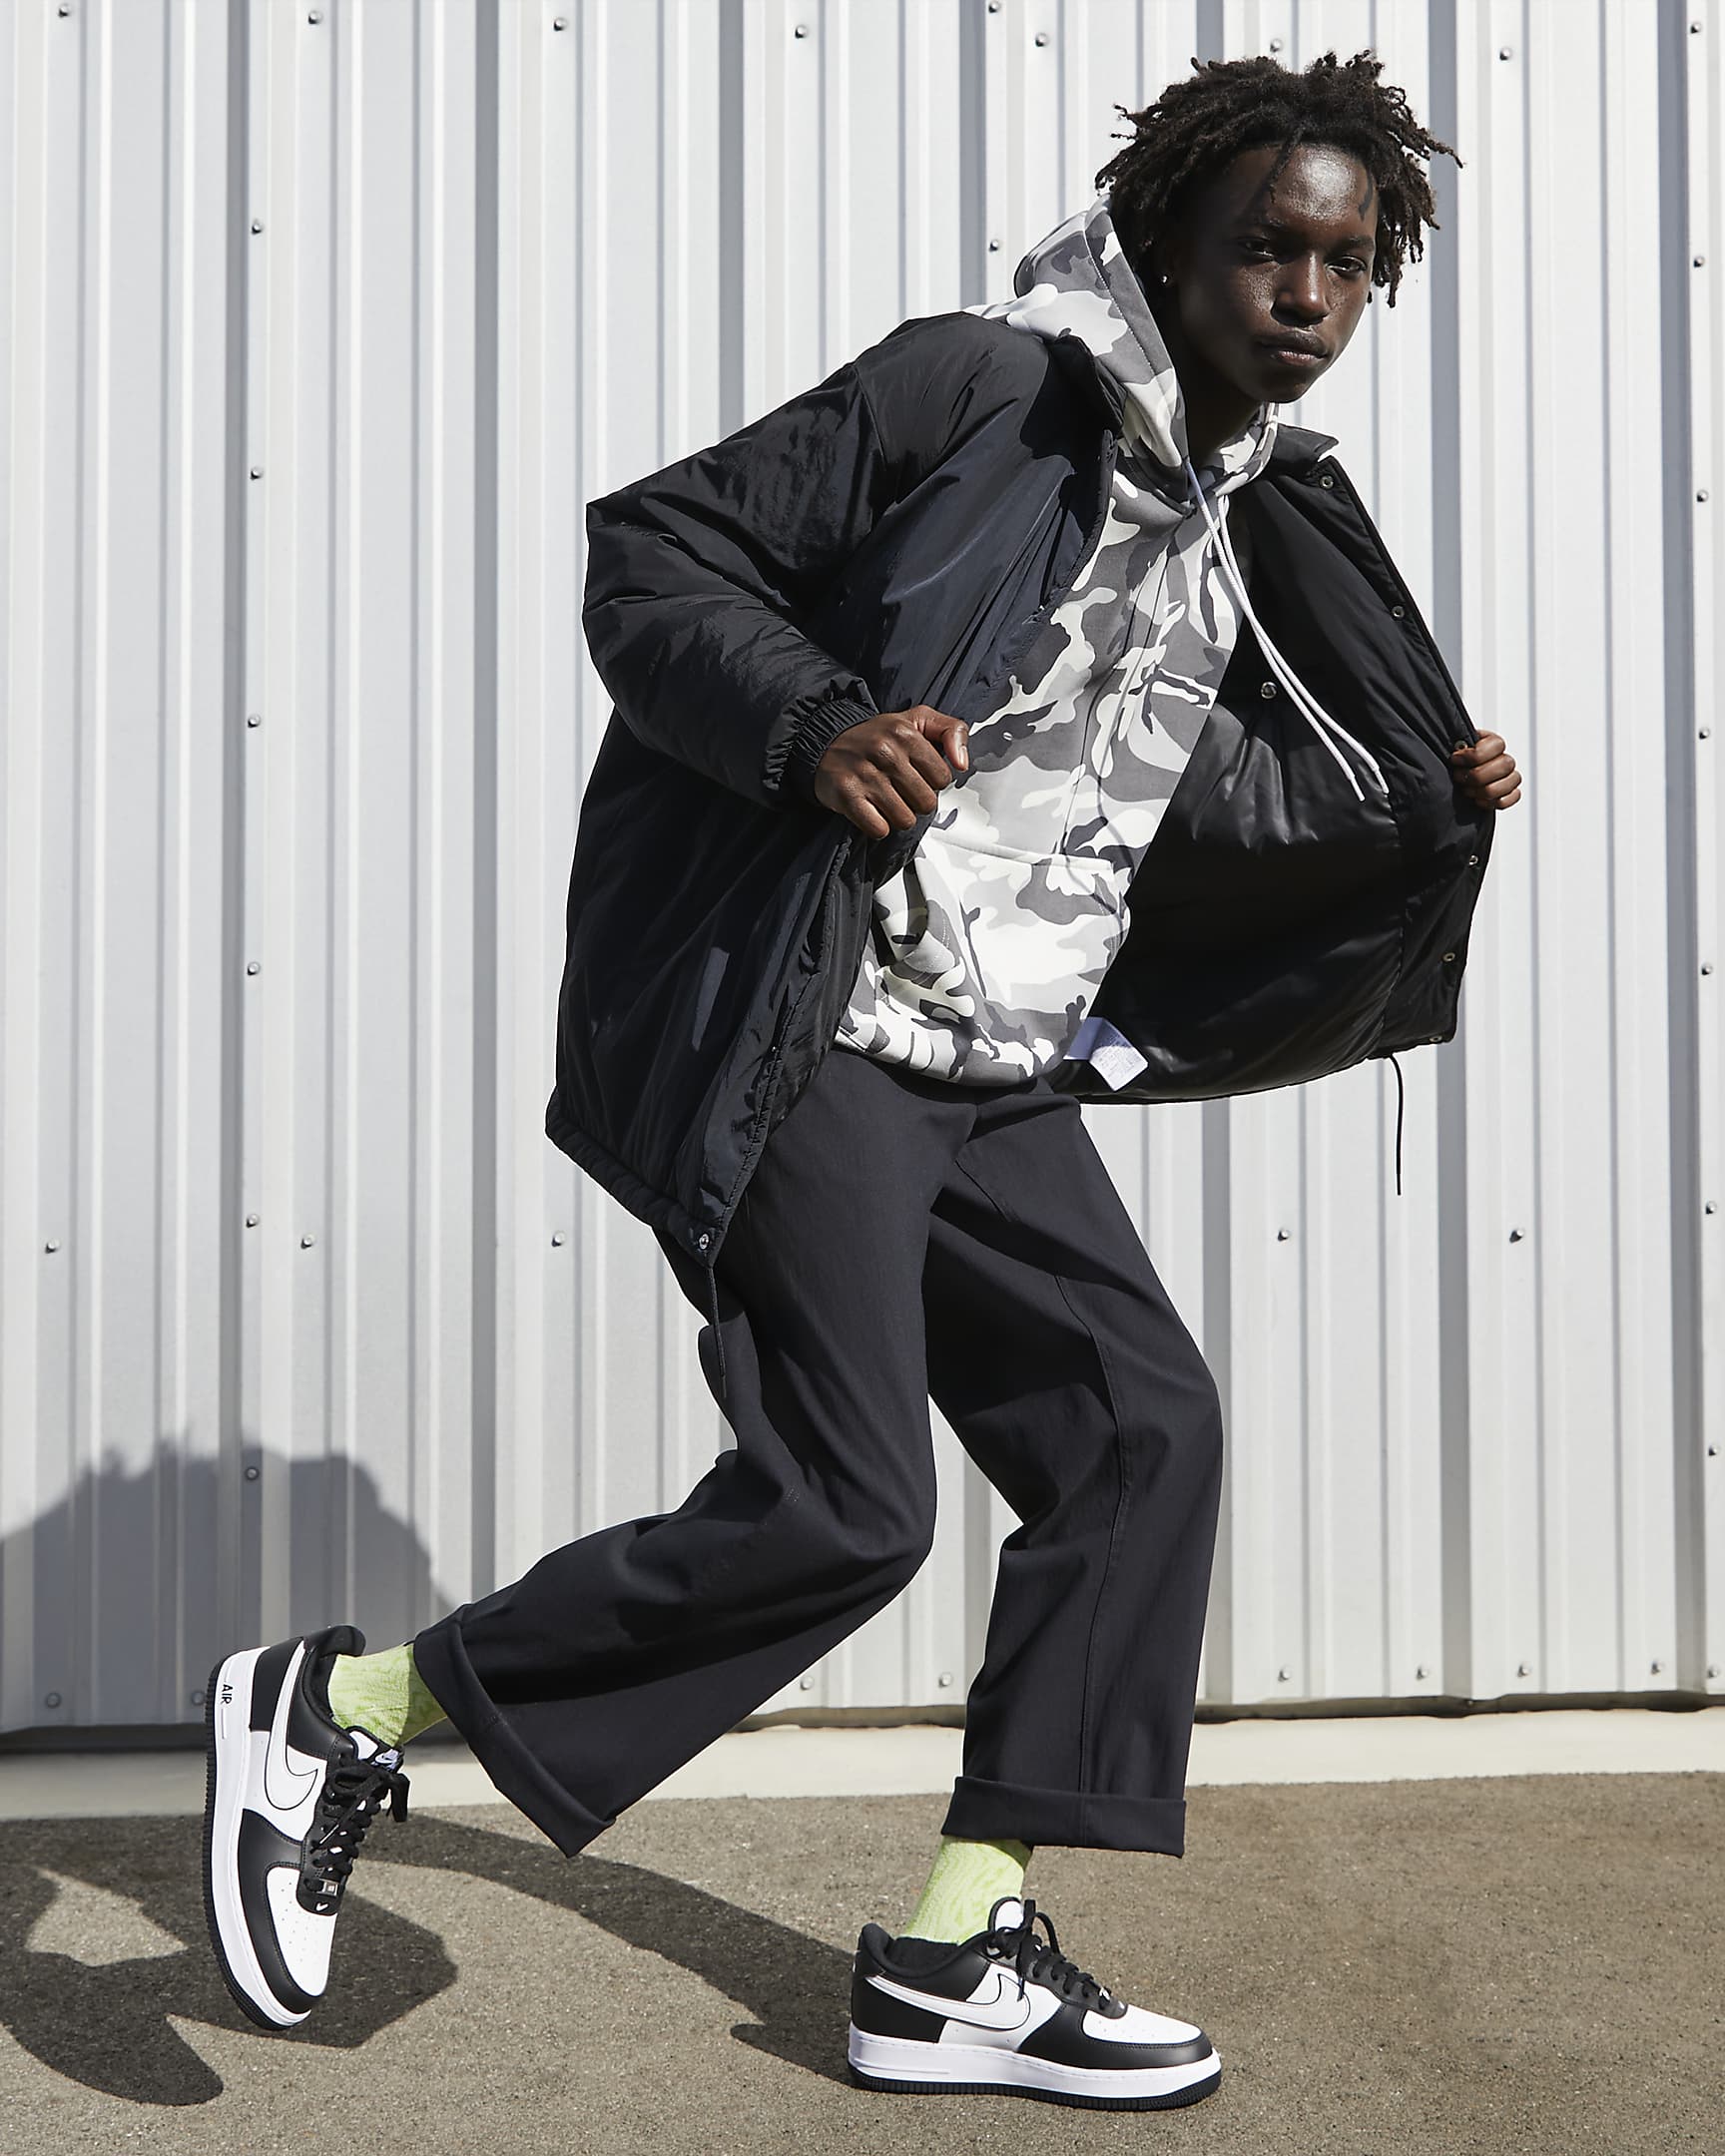 Chaussure Nike Air Force 1 '07 pour homme - Noir/Noir/Blanc